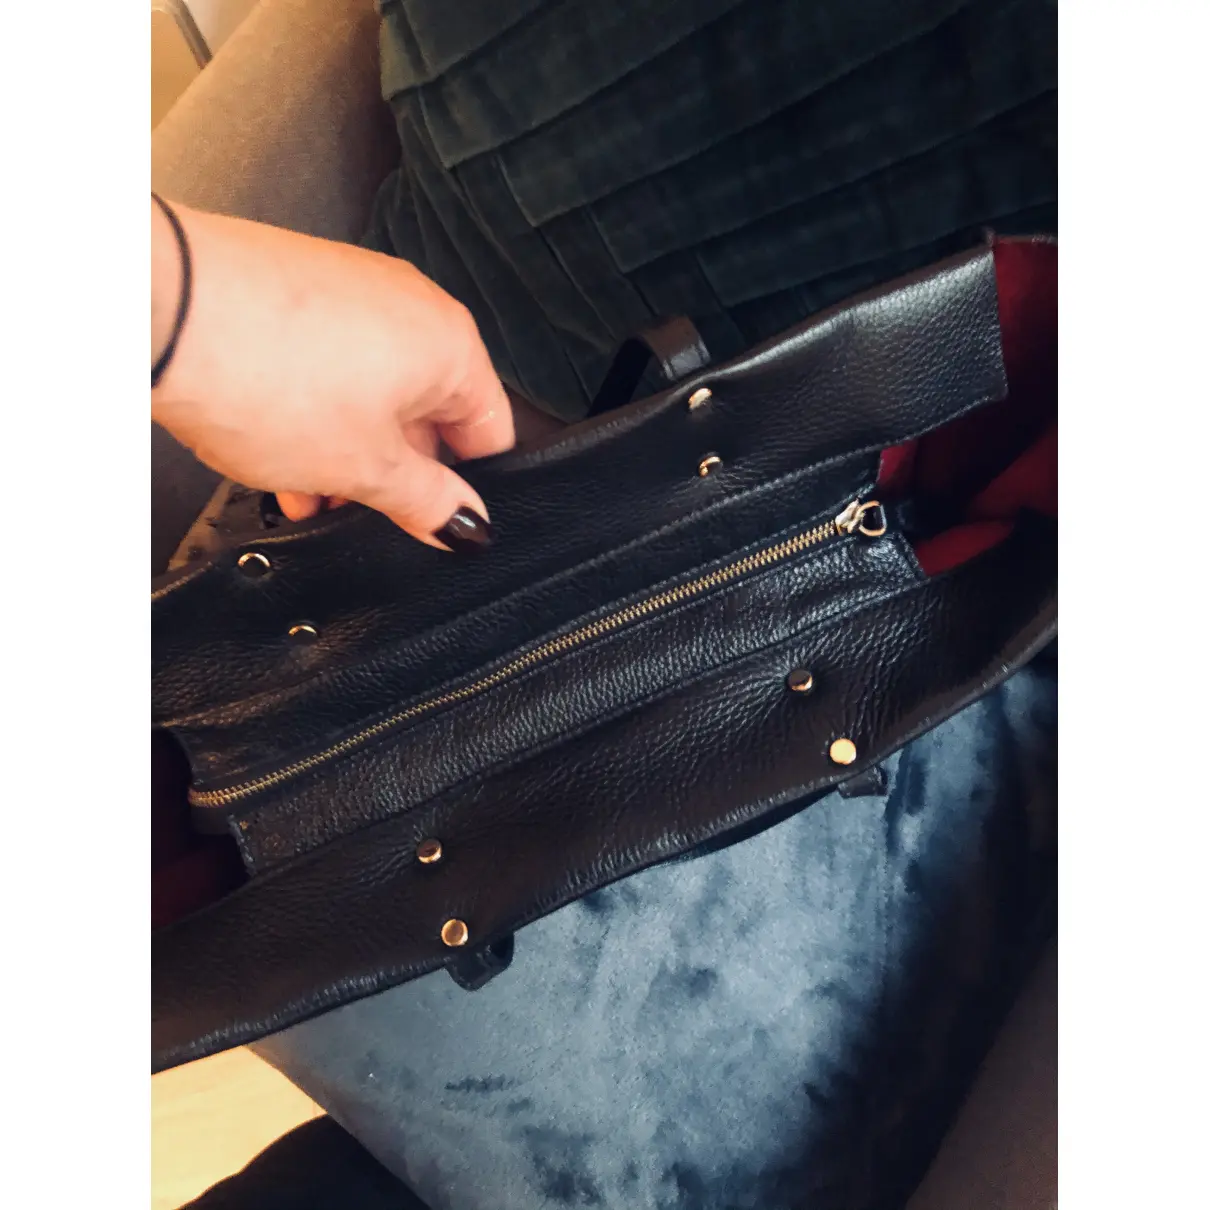 Leather handbag V 73